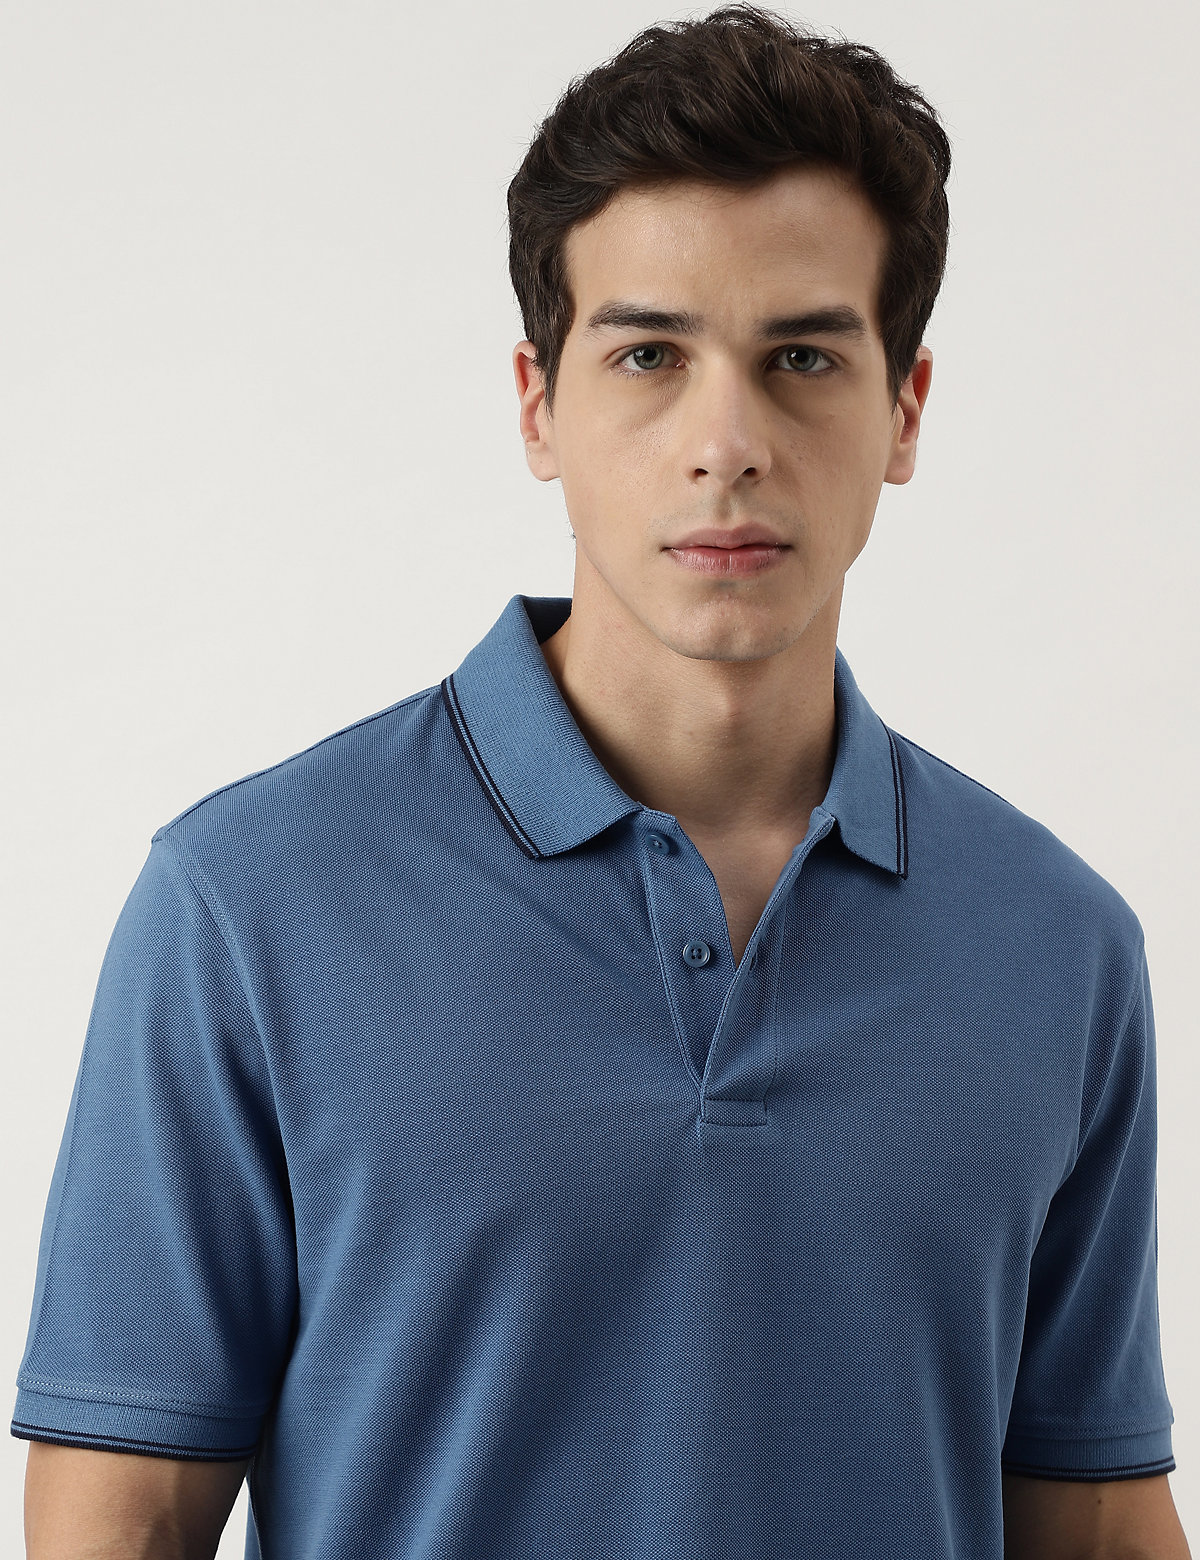 Cotton Striped Spread Collar Polo T-Shirt